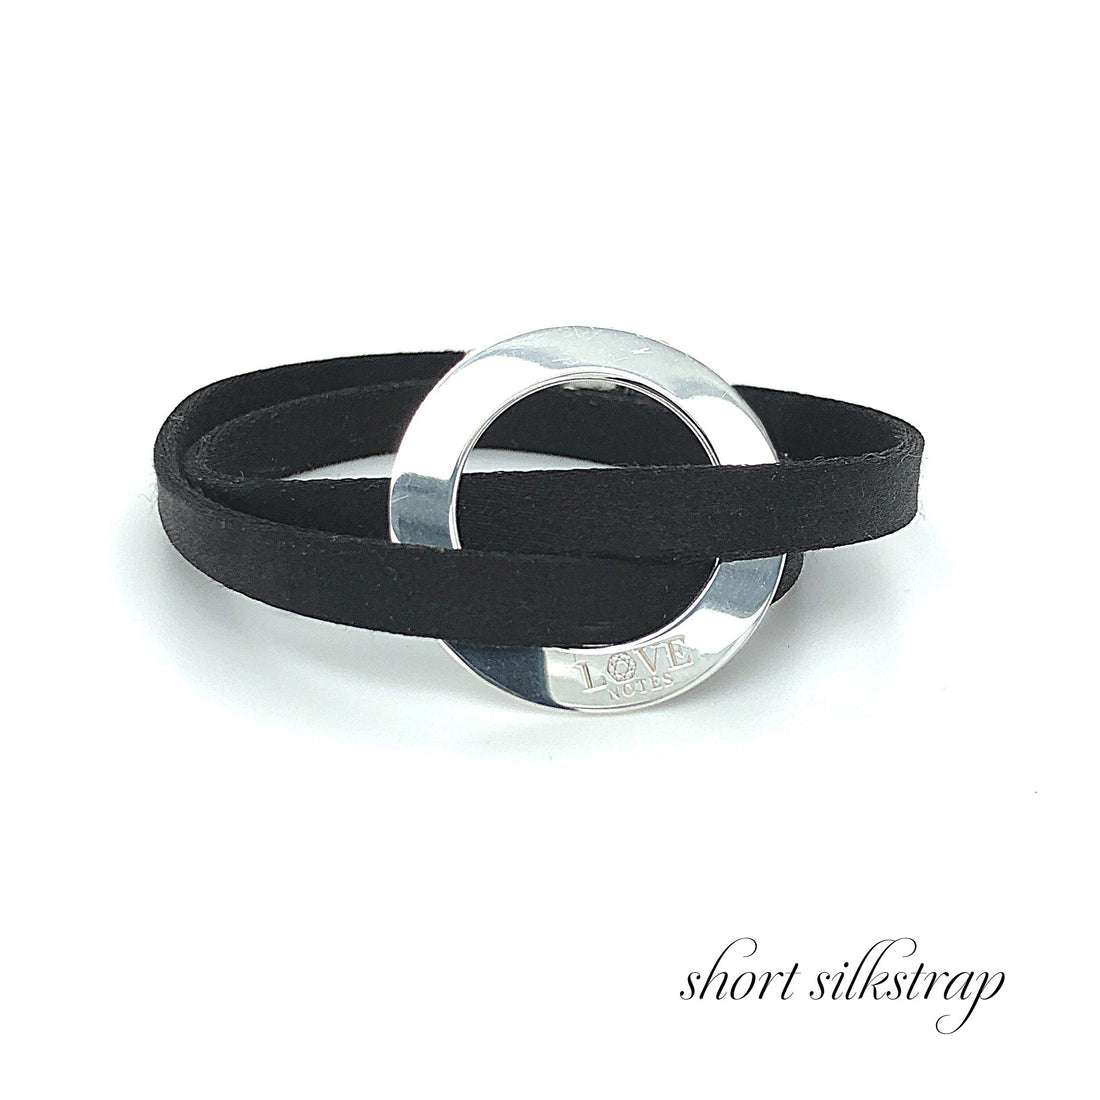 Al segno rondo silver bracelet with short silkstrap.